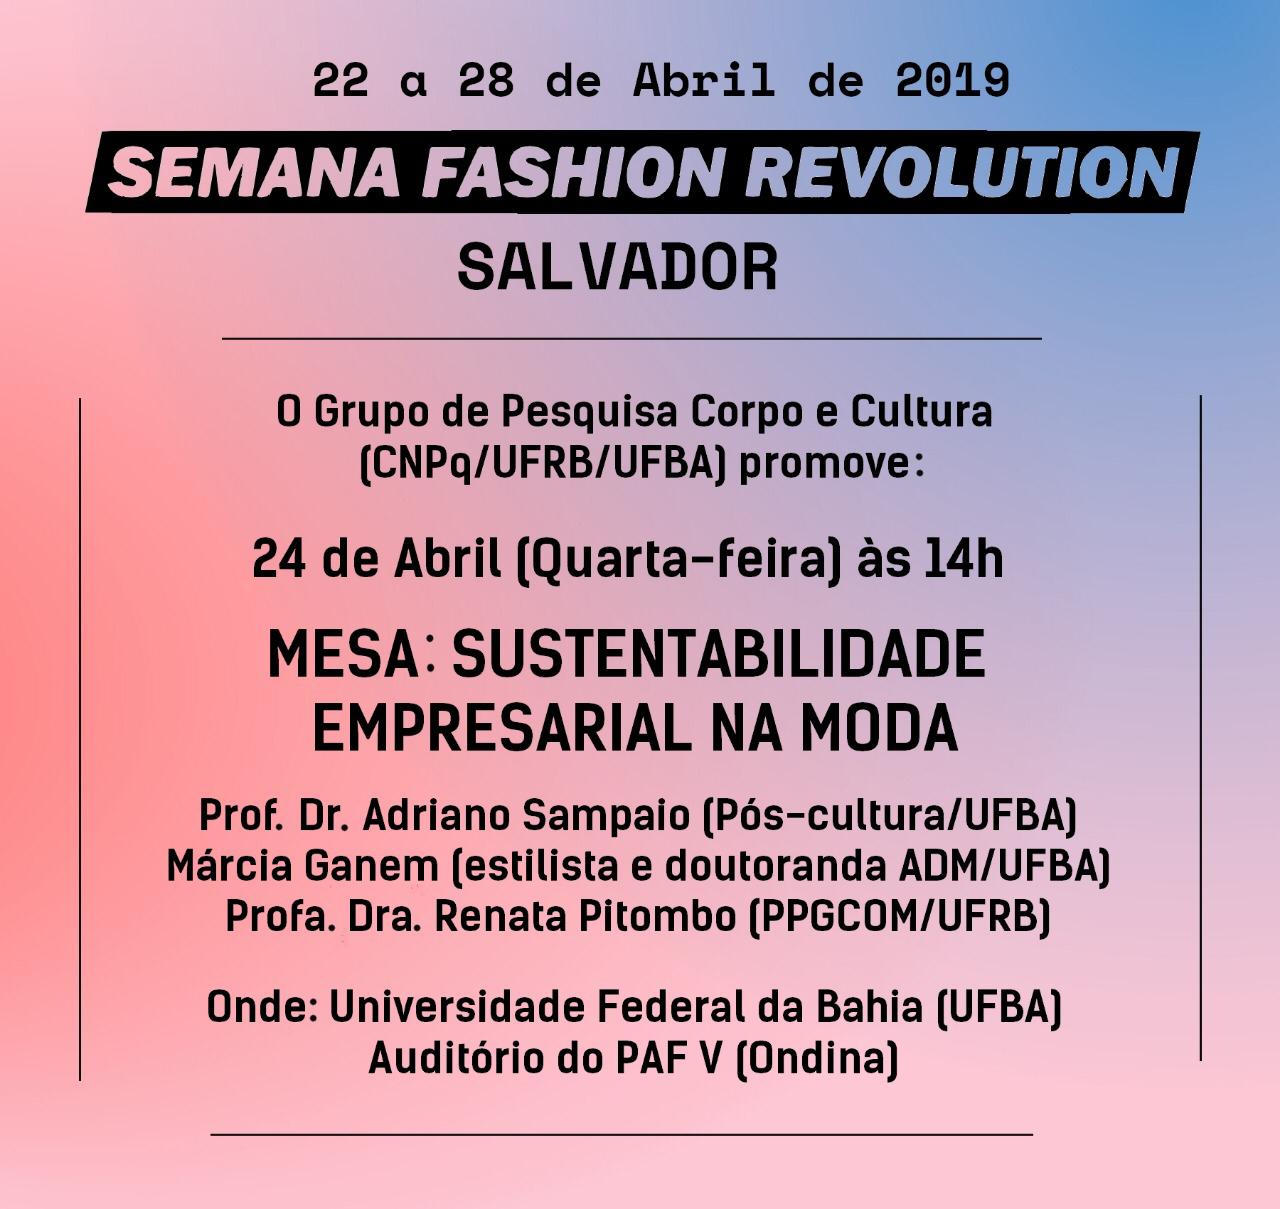 Moda e sustentabilidade será tema de mesa-redonda na UFBA durante a semana Fashion Revolution Salvador